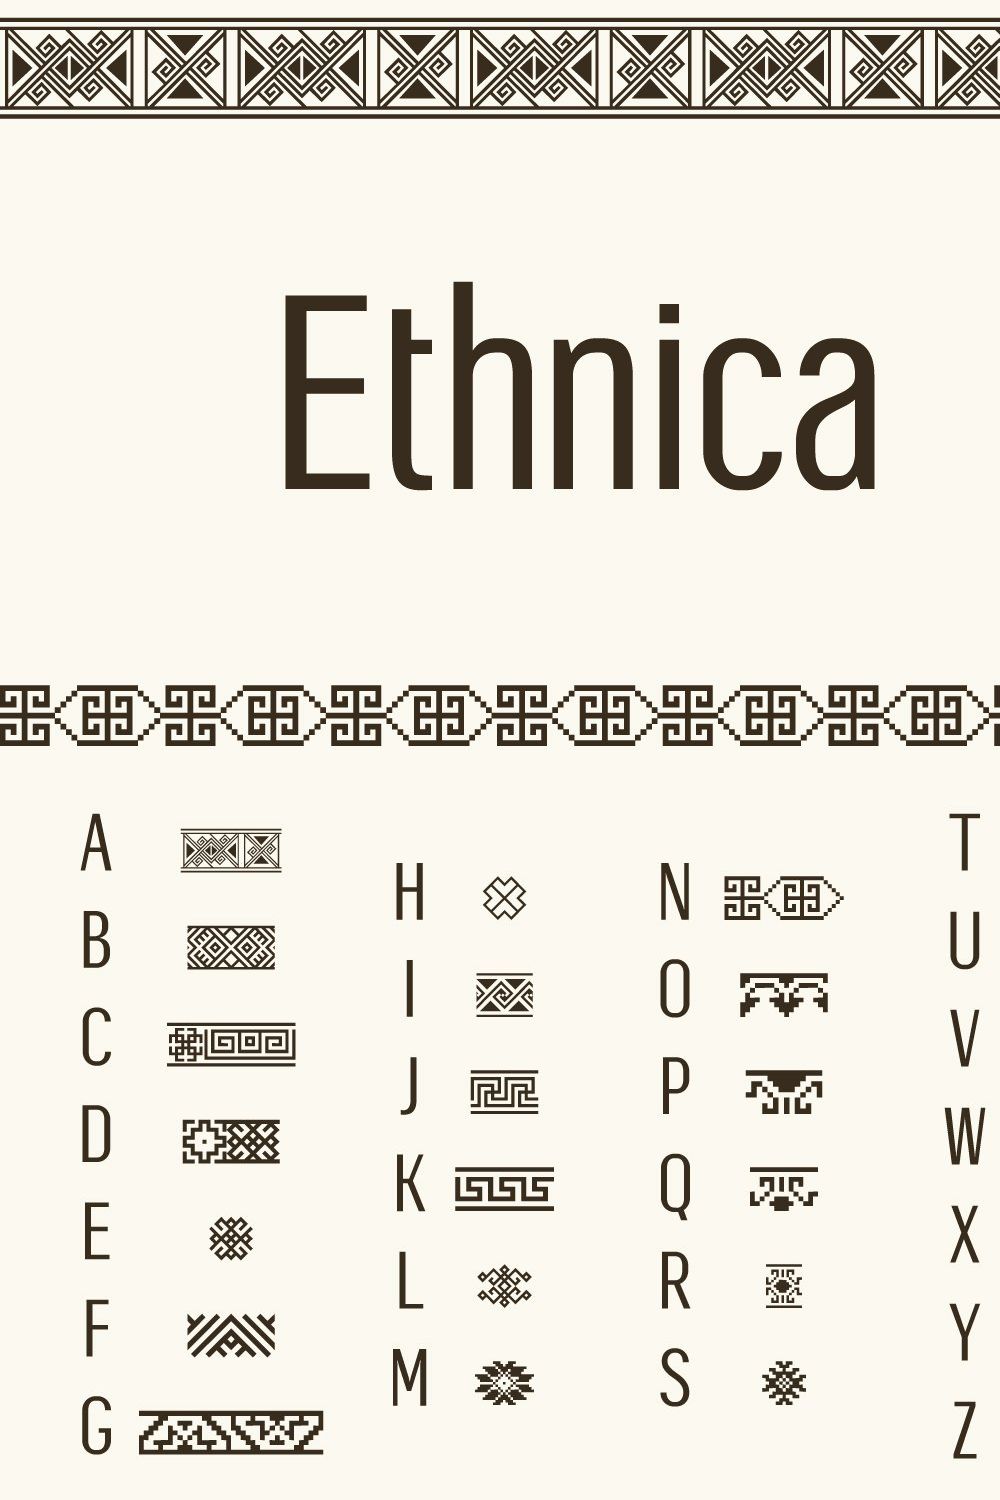 Symbol font Ethnica pinterest preview image.